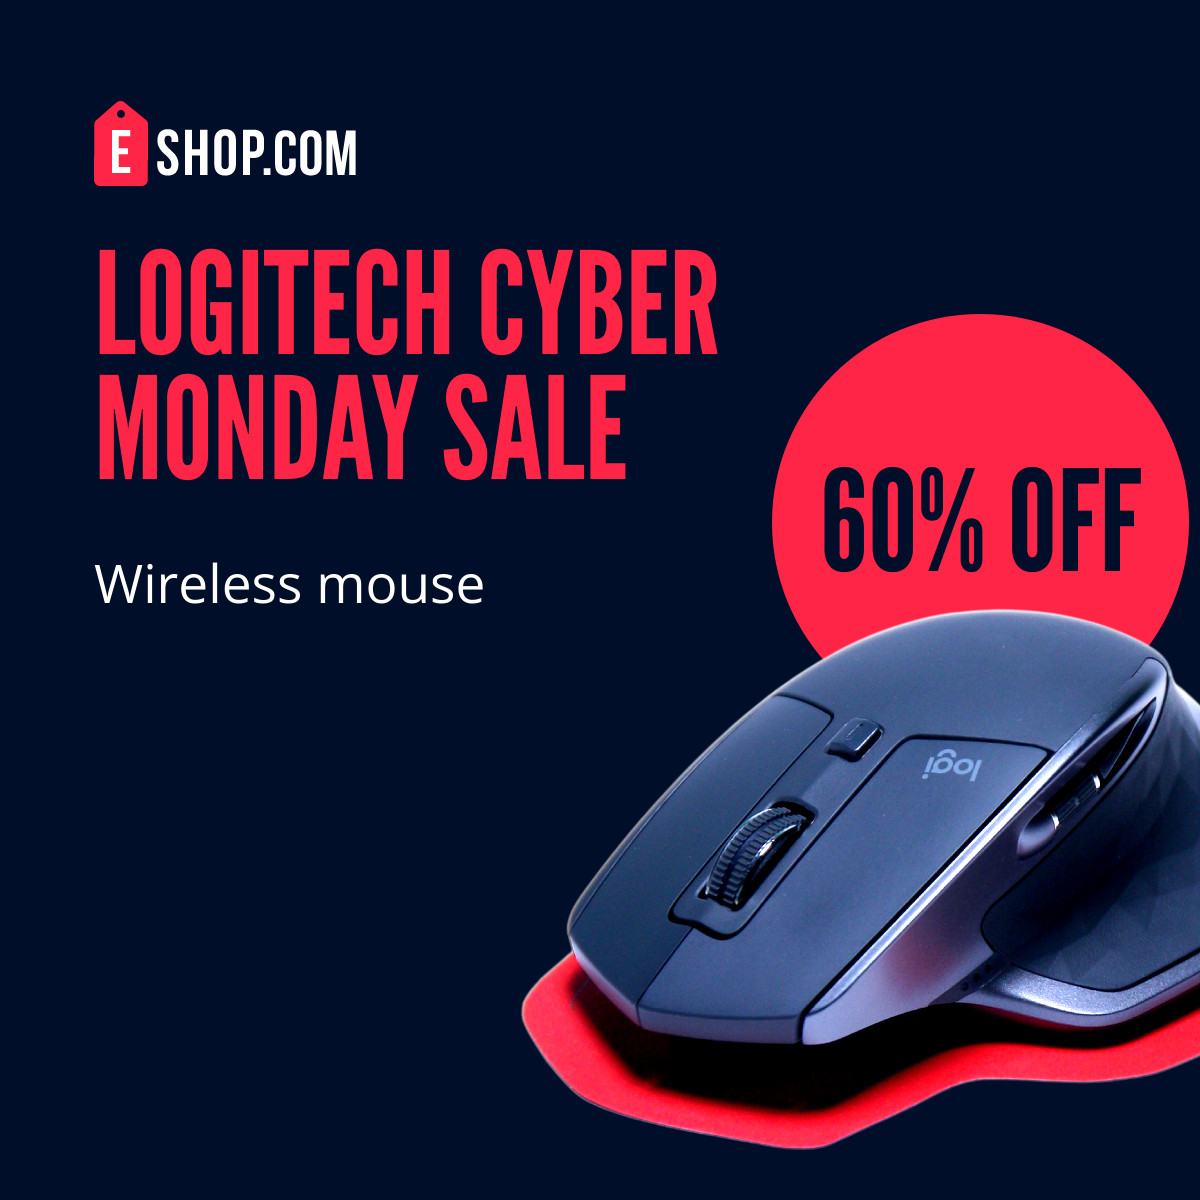 Logitech Mouse Cyber Monday Sale Inline Rectangle 300x250